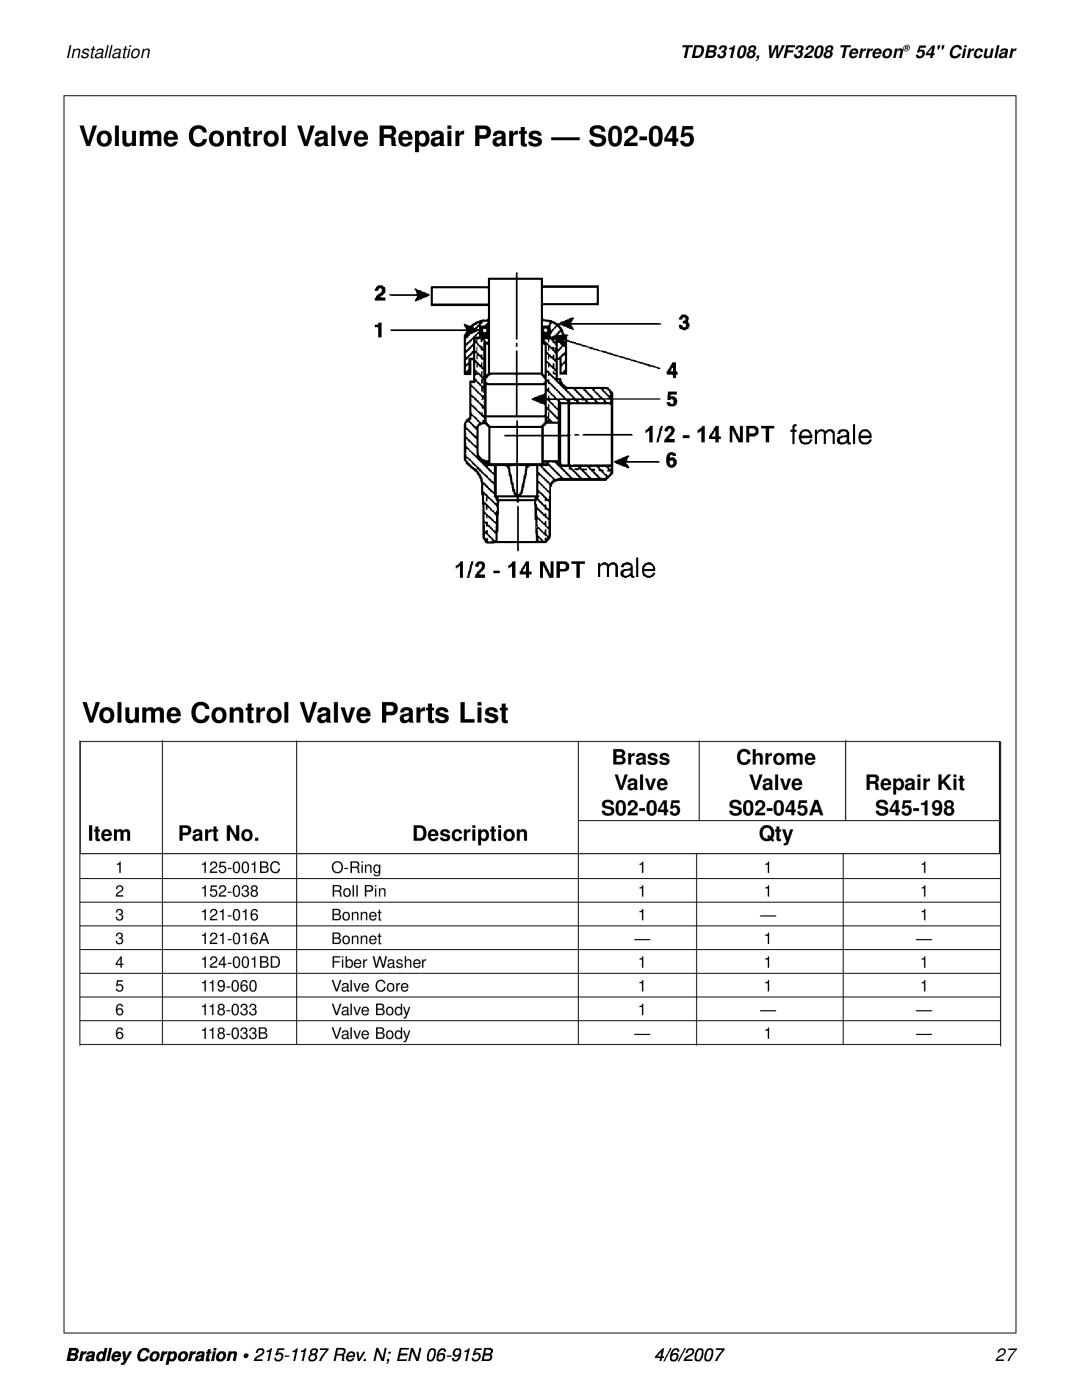 Bradley Smoker TDB3108 Volume Control Valve Repair Parts - S02-045, Volume Control Valve Parts List, Brass, Chrome 